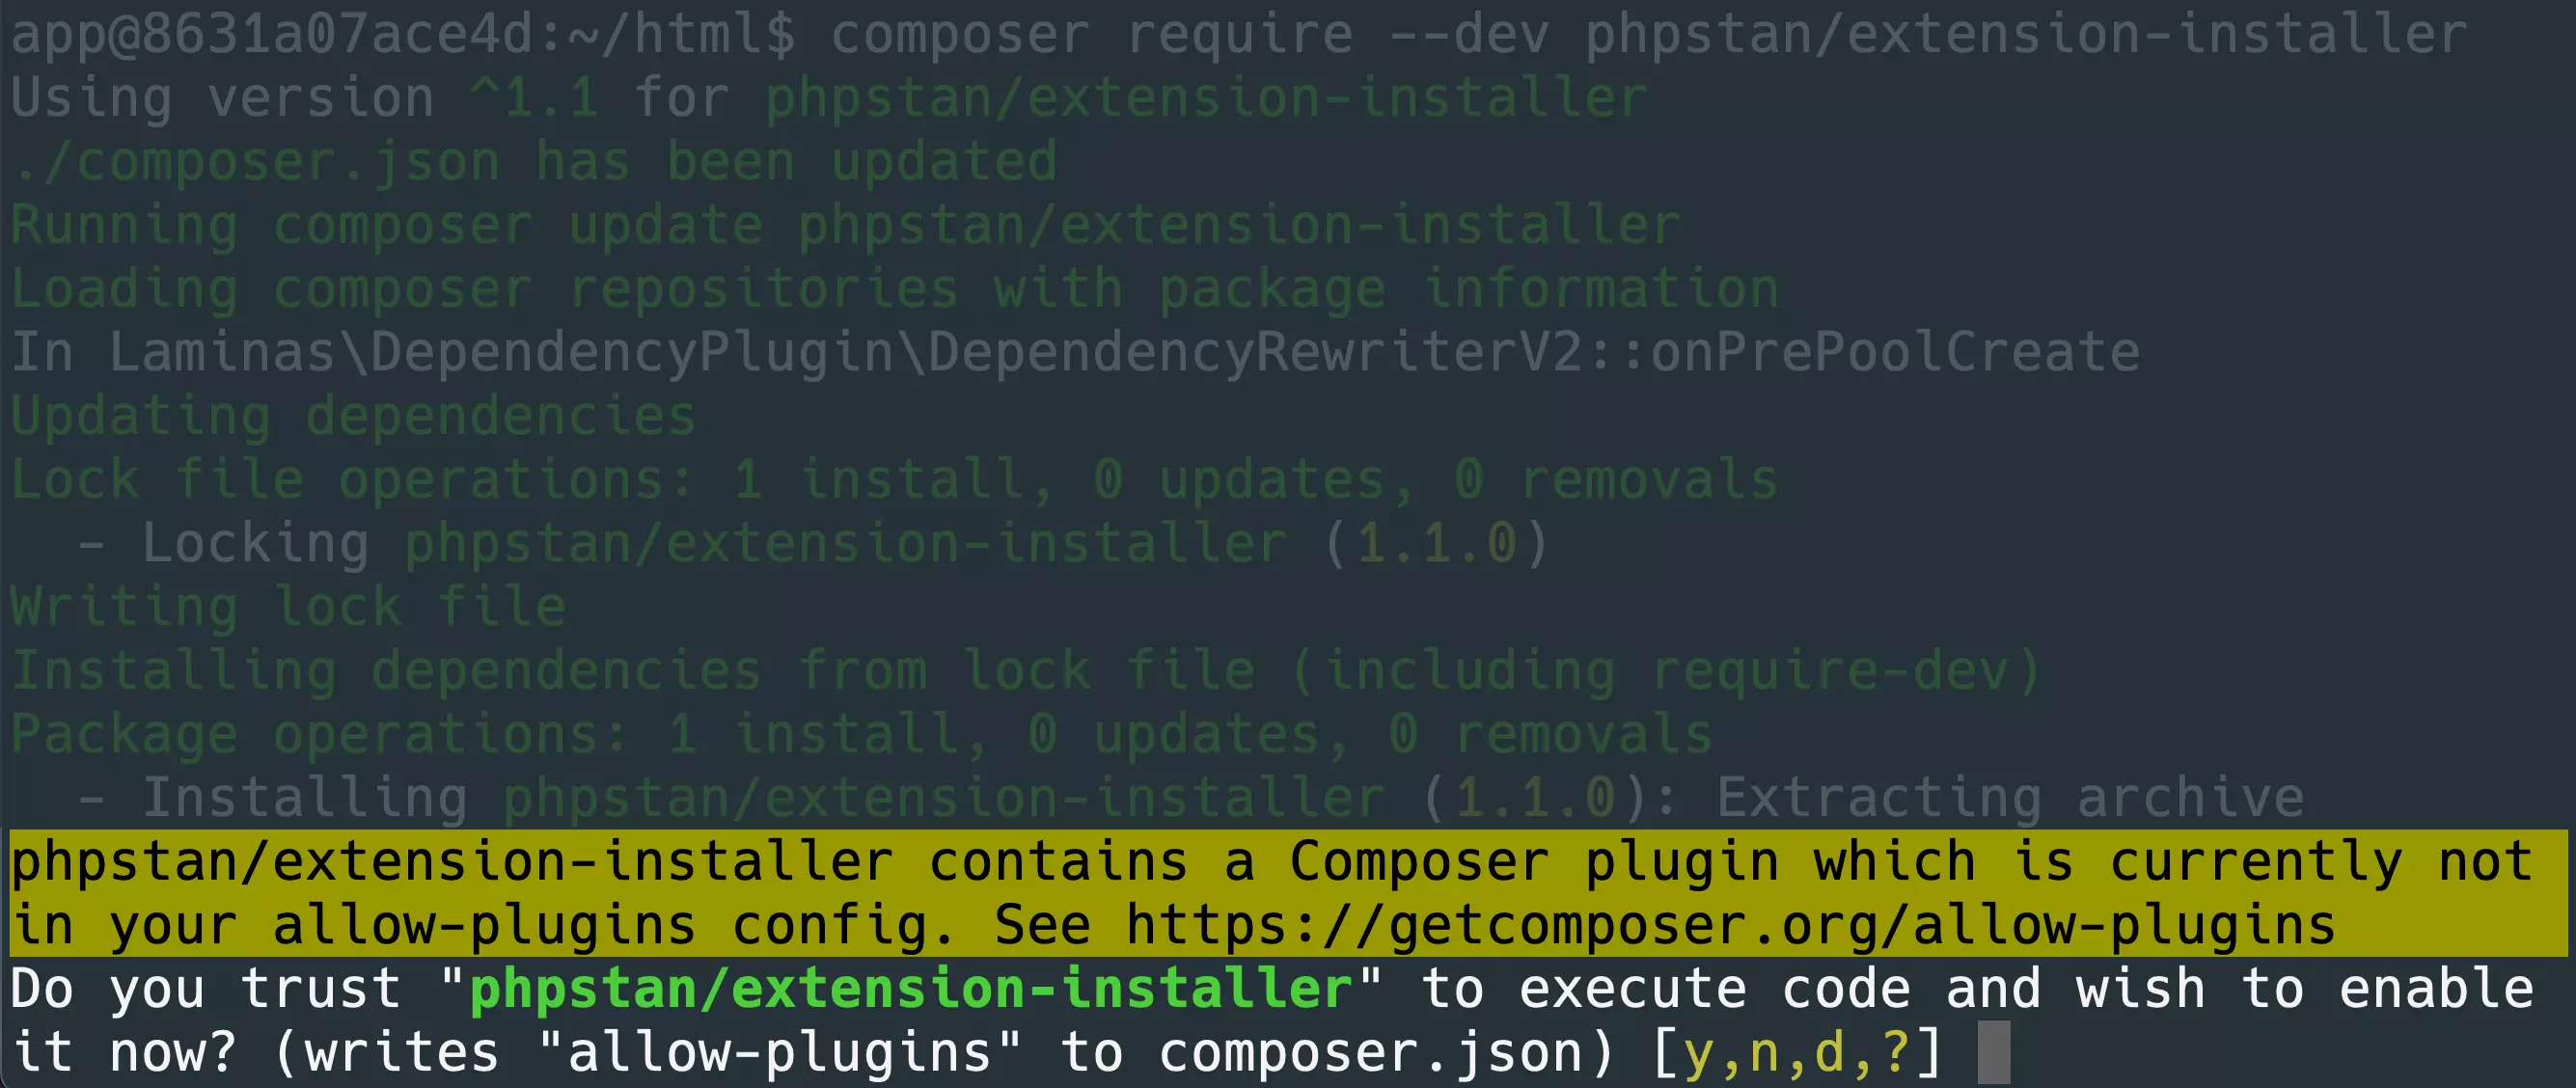 Composer allow-plugins prompt